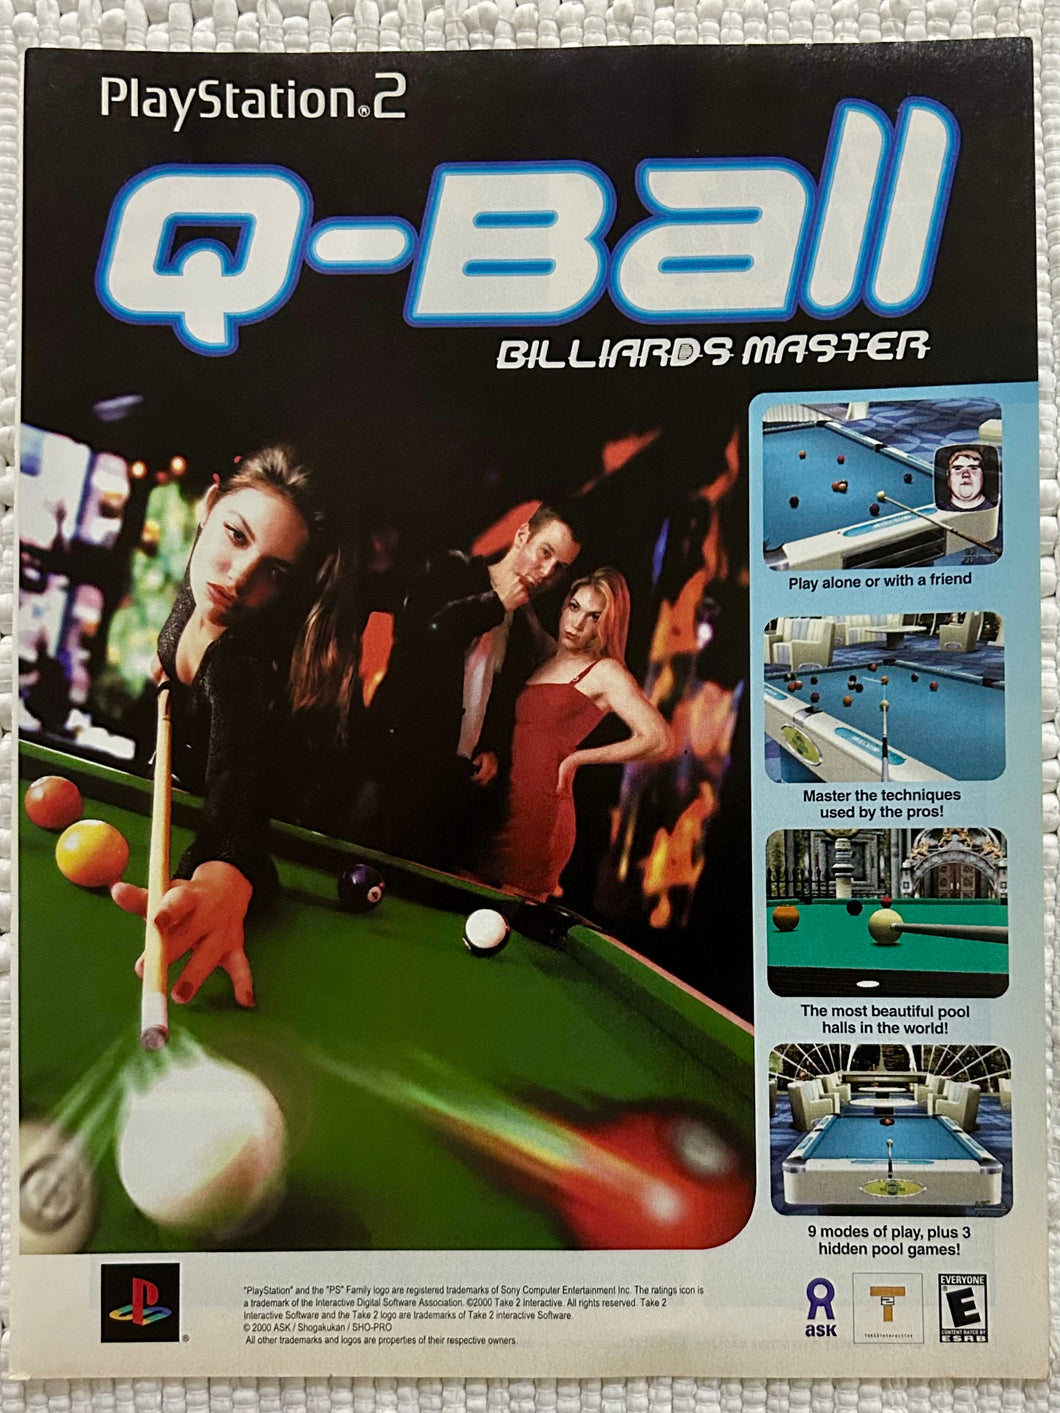 Q-Ball Billards Master - PS2 - Original Vintage Advertisement - Print Ads - Laminated A4 Poster